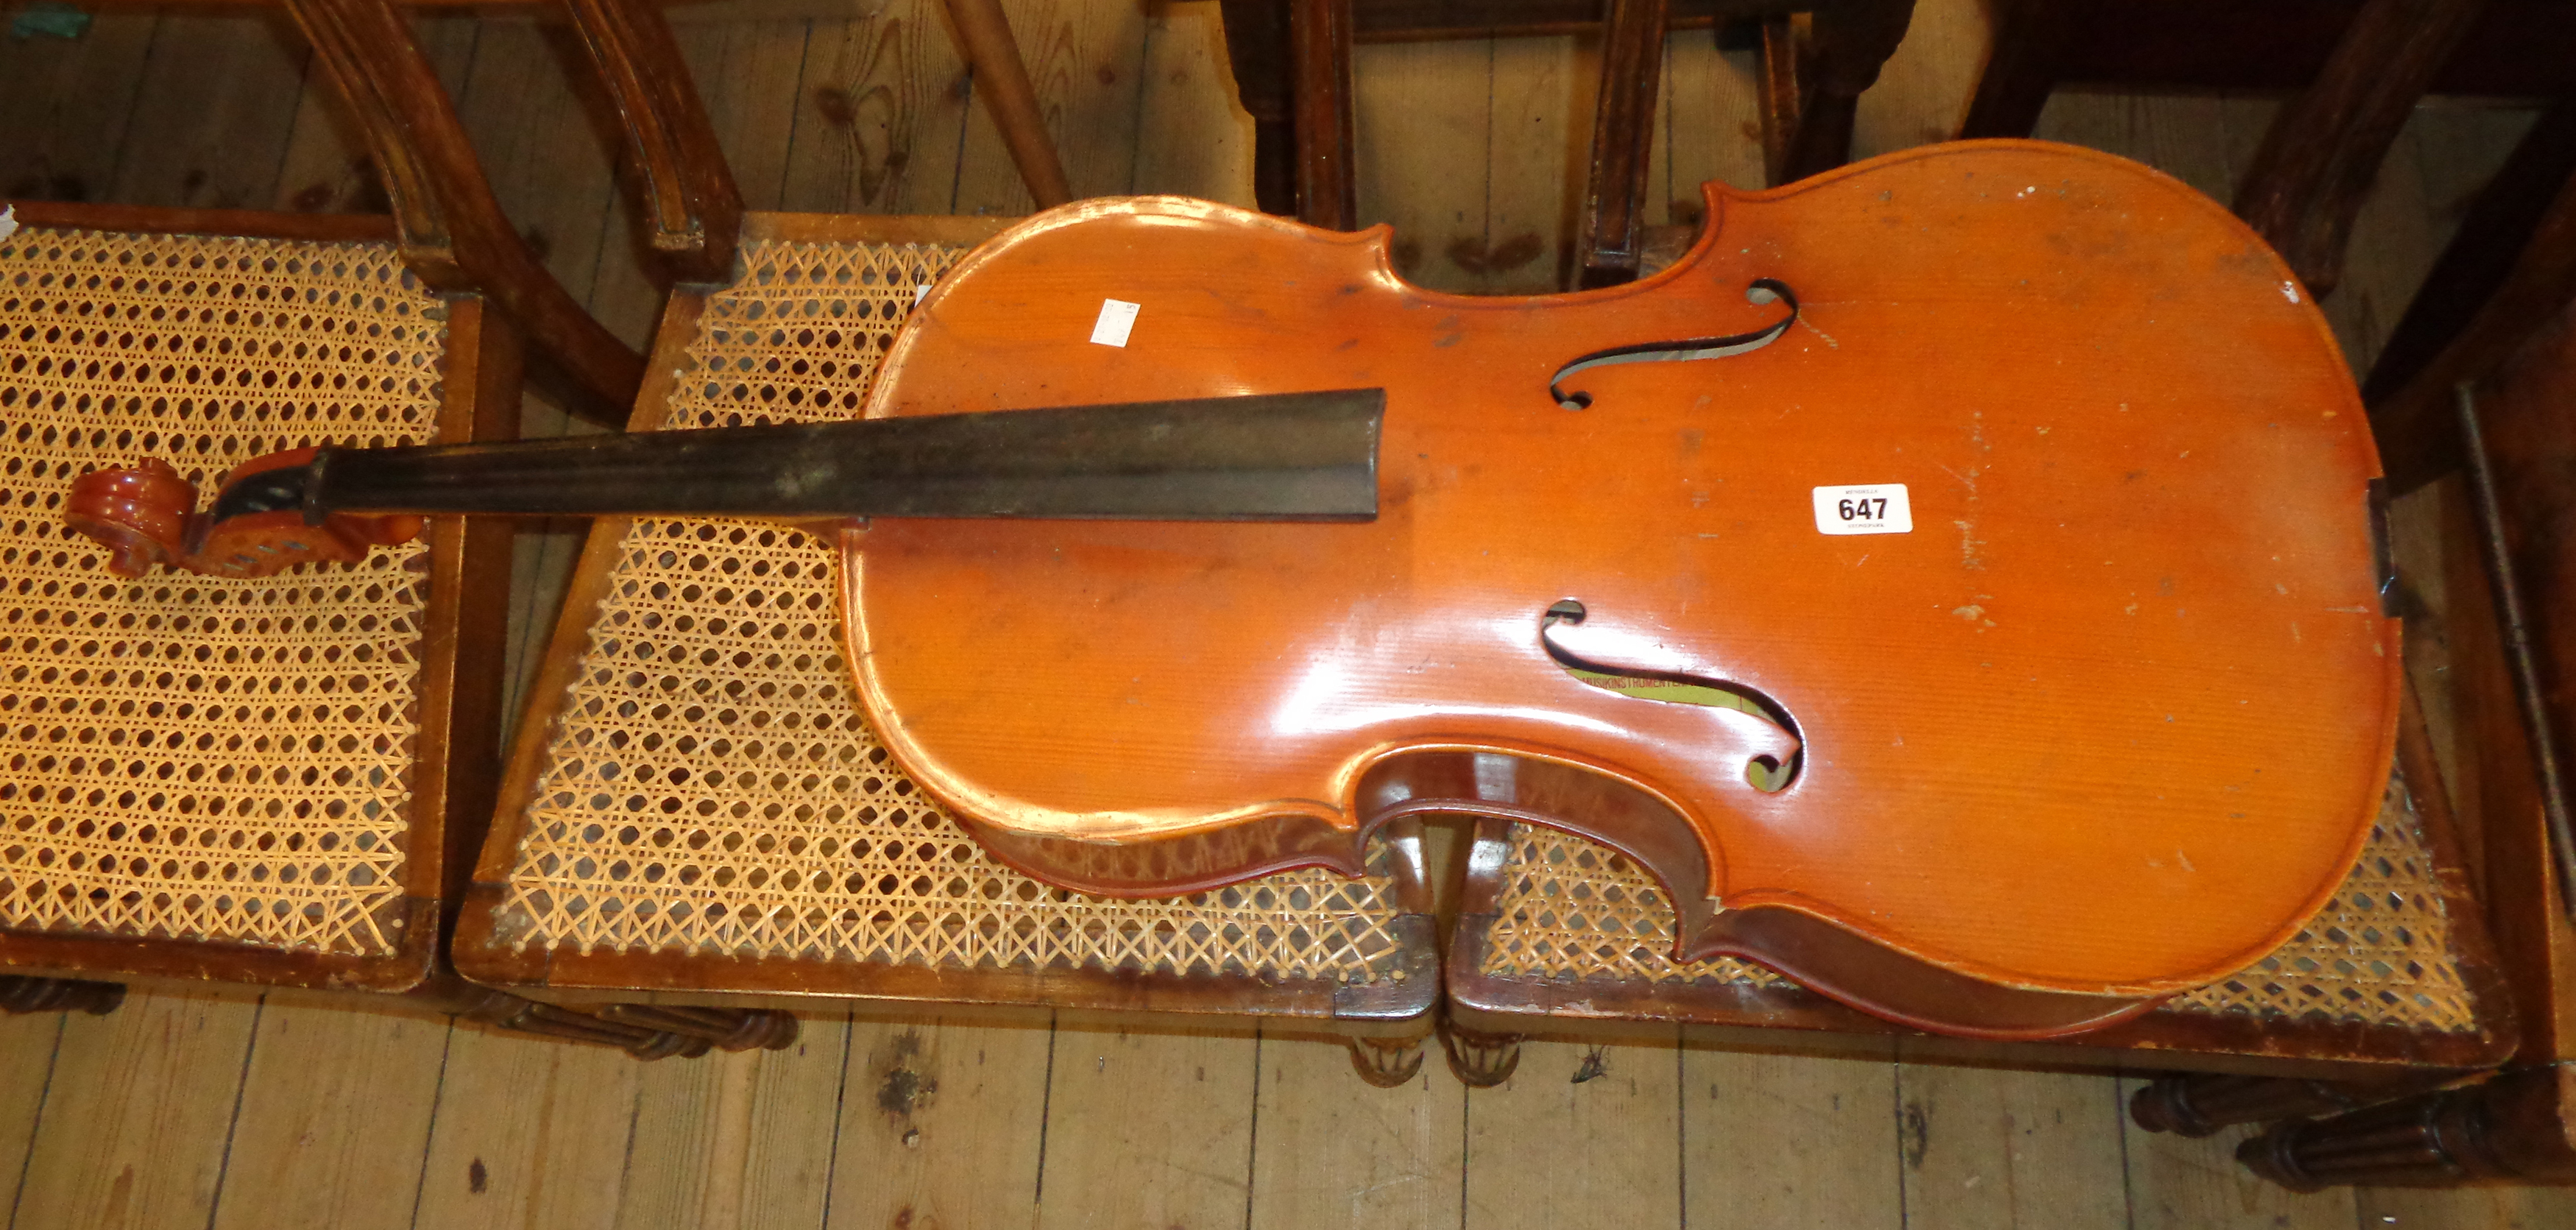 A Romanian made Musikinstrumentenfabrik cello - for restoration